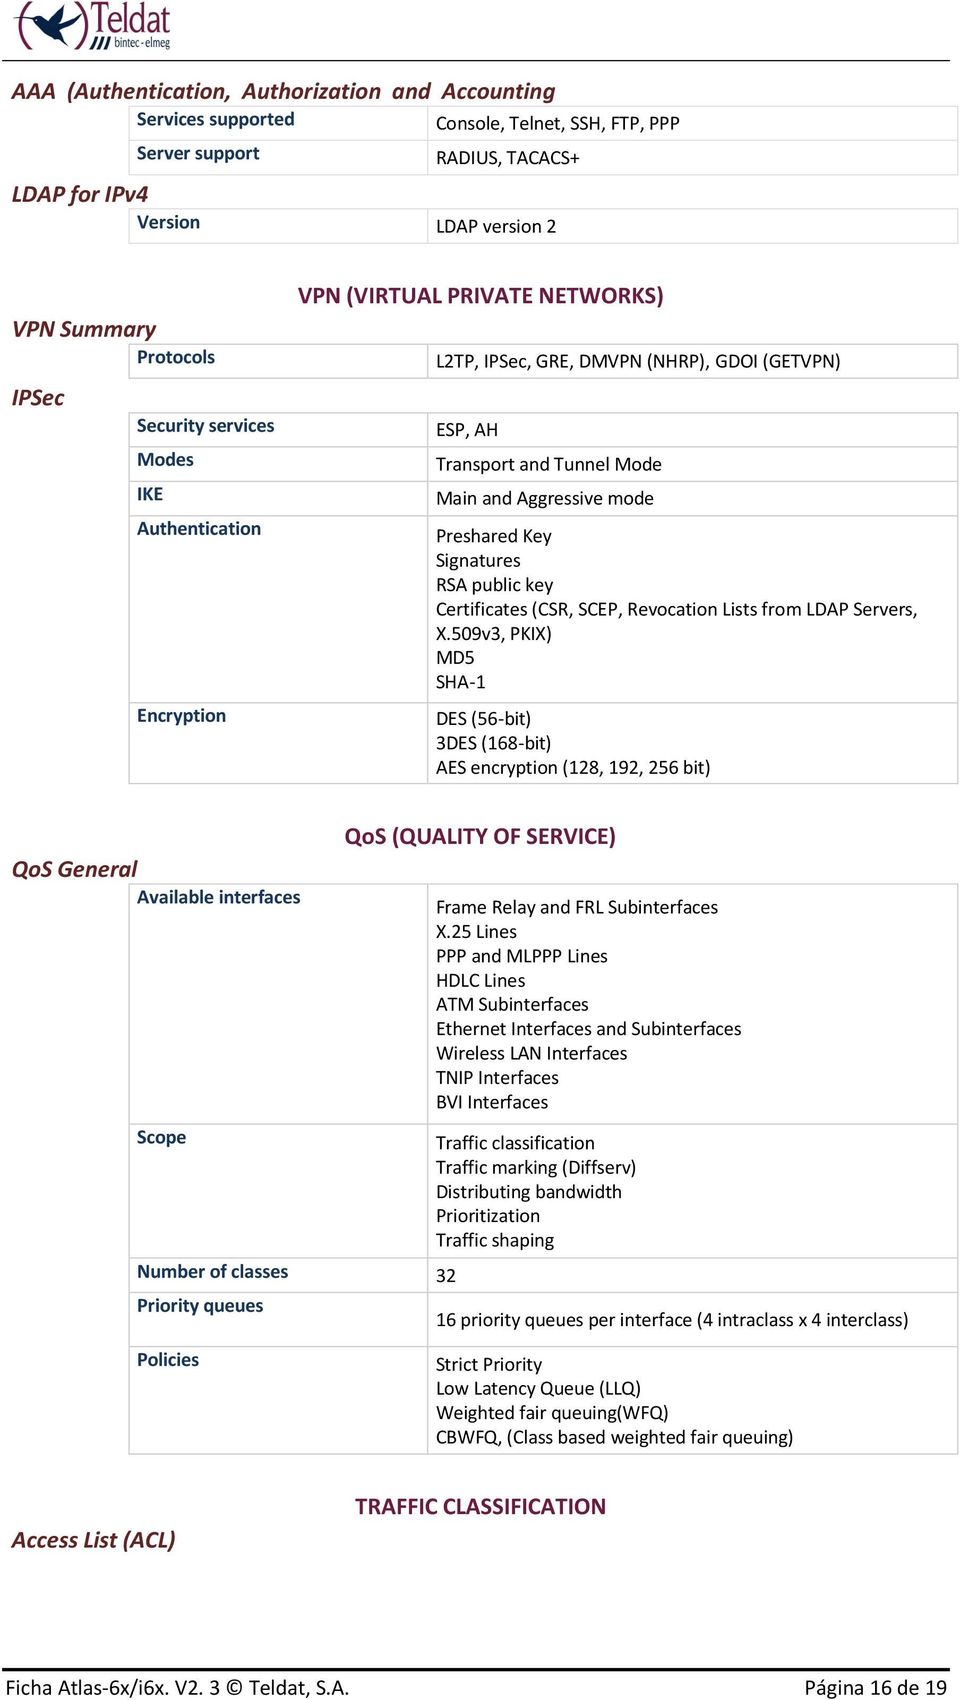 Key Signatures RSA public key Certificates (CSR, SCEP, Revocation Lists from LDAP Servers, X.